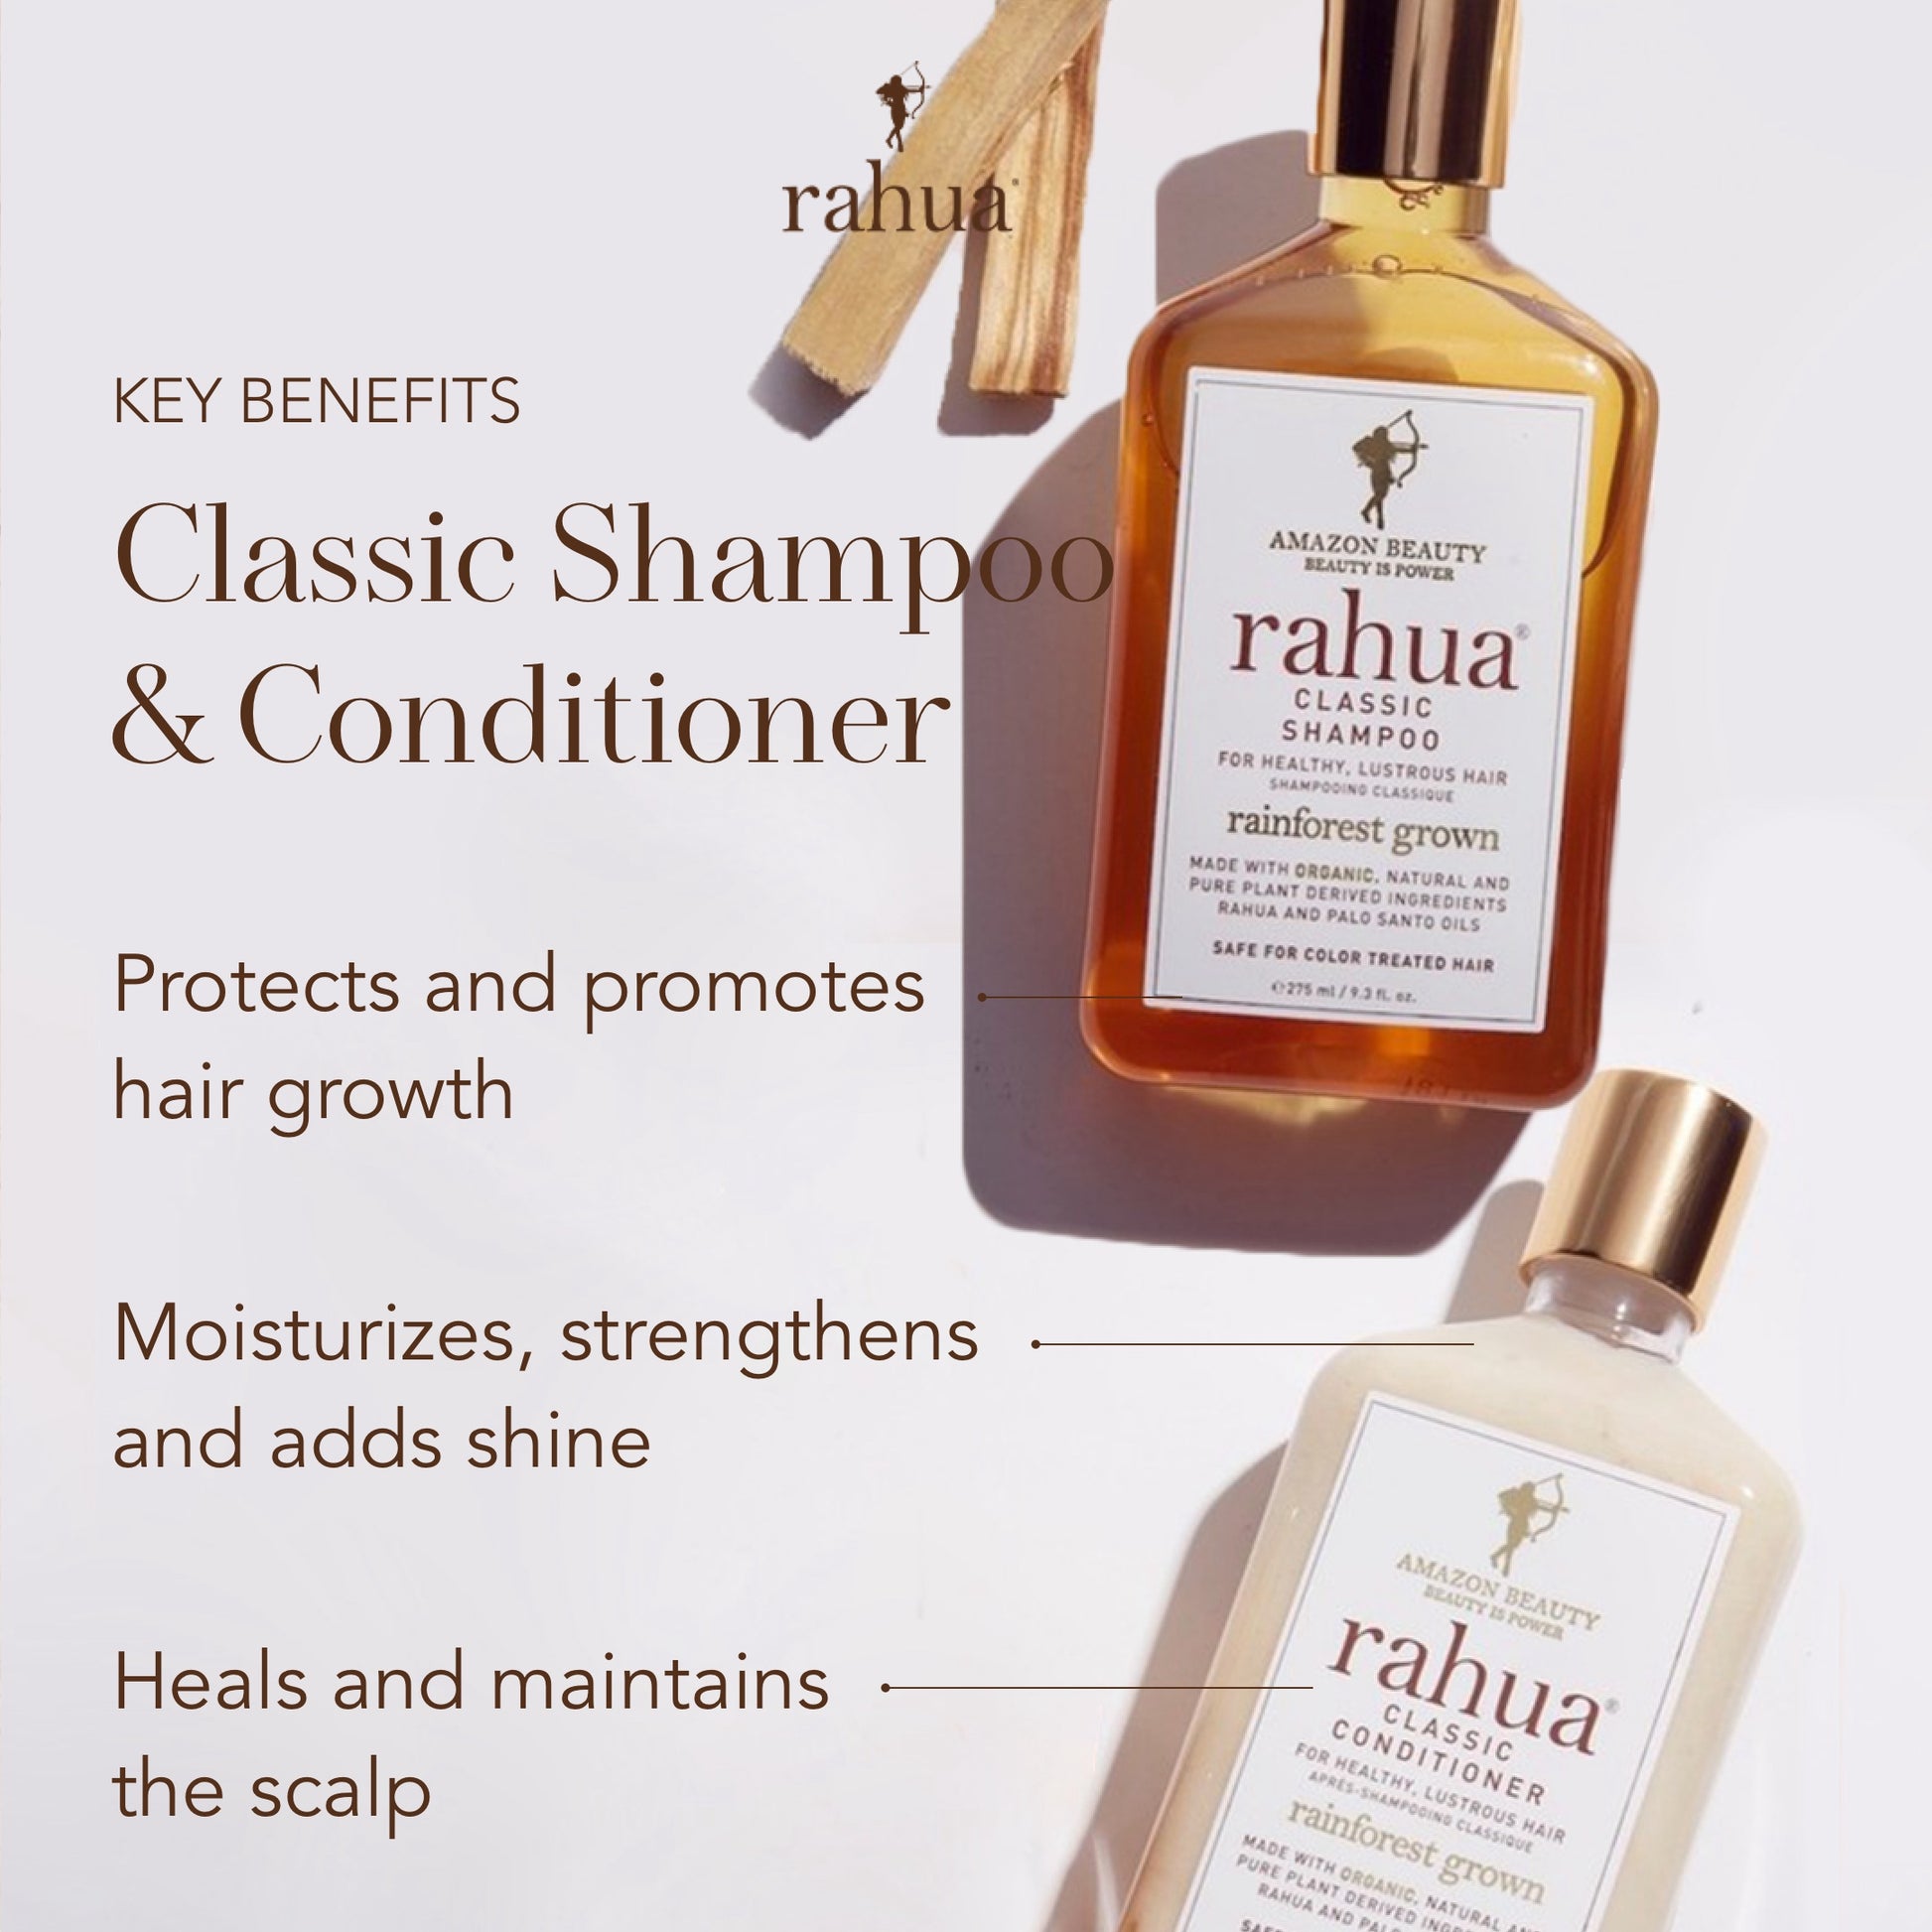 Rahua Classic Shampoo and classic conditioner key benefits infographic